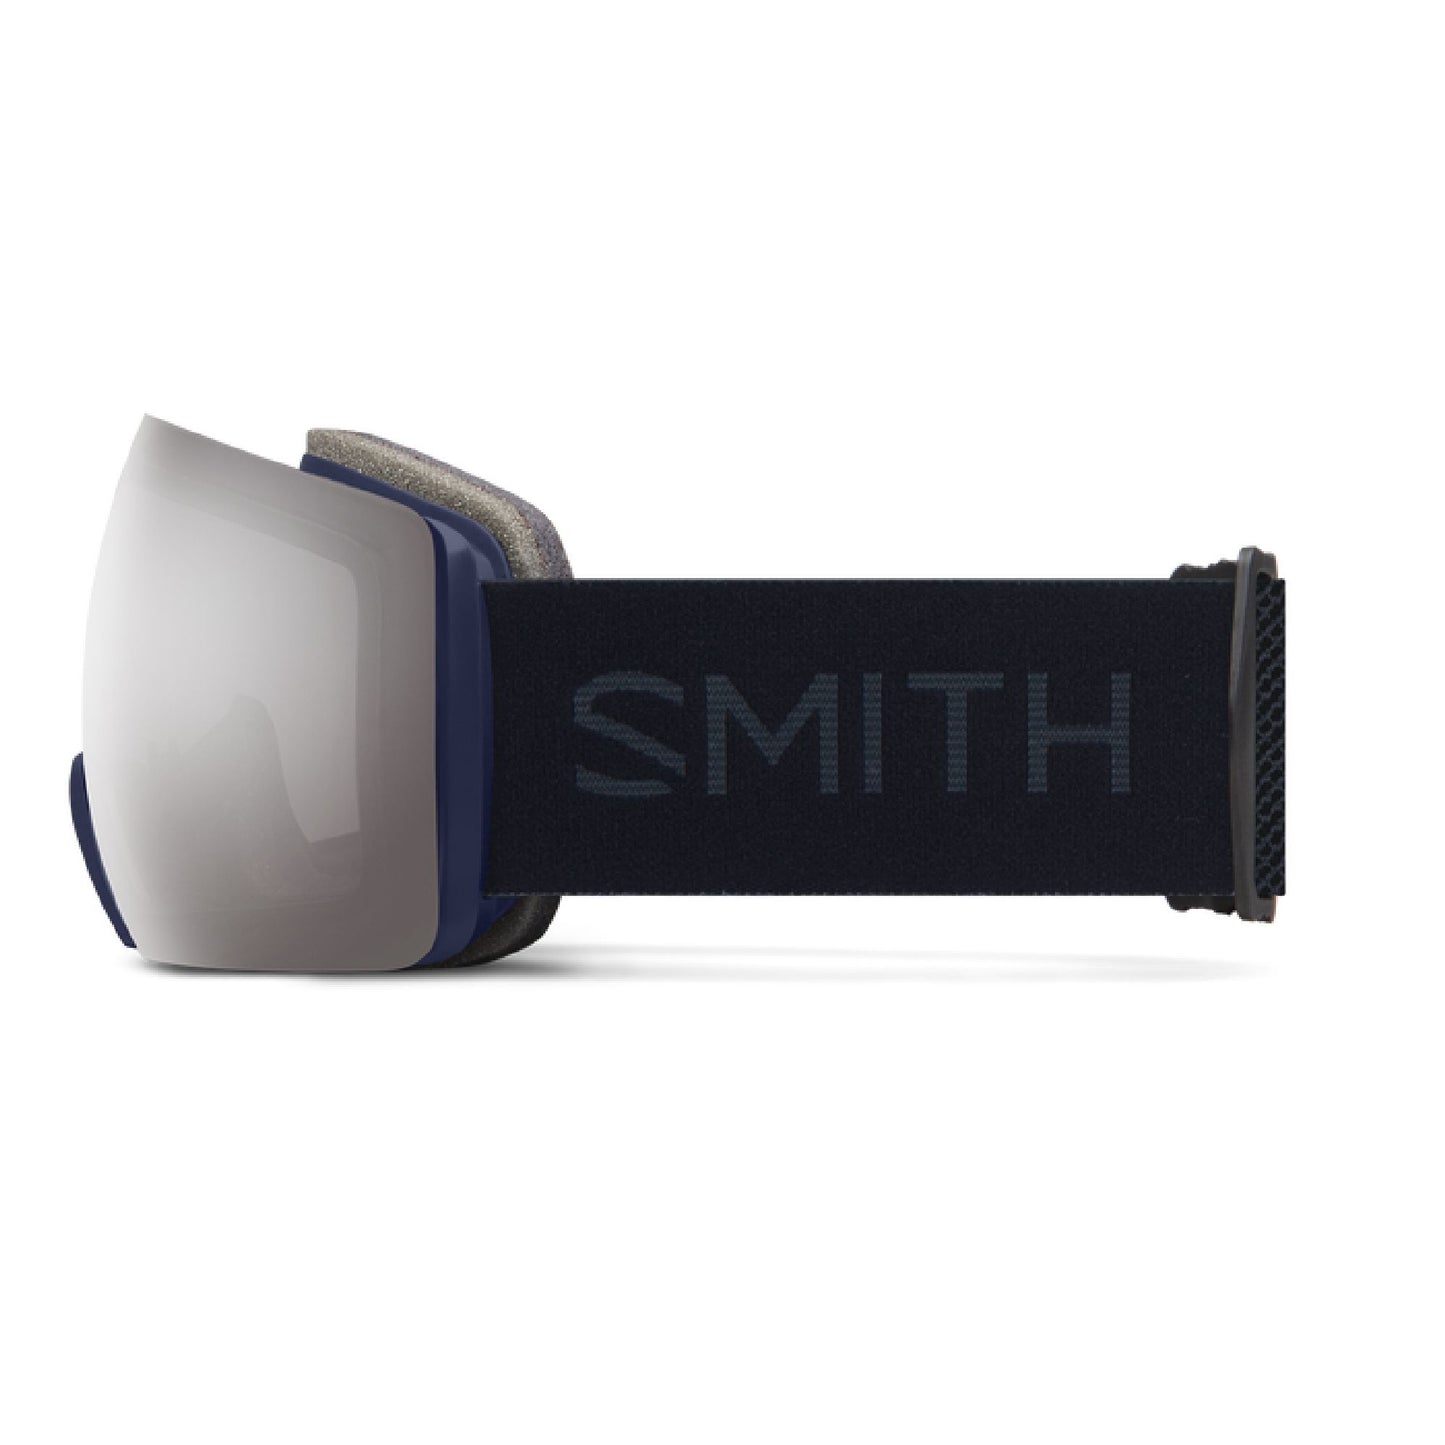 Smith Skyline XL Snow Goggle Midnight Navy ChromaPop Sun Platinum Mirror Snow Goggles